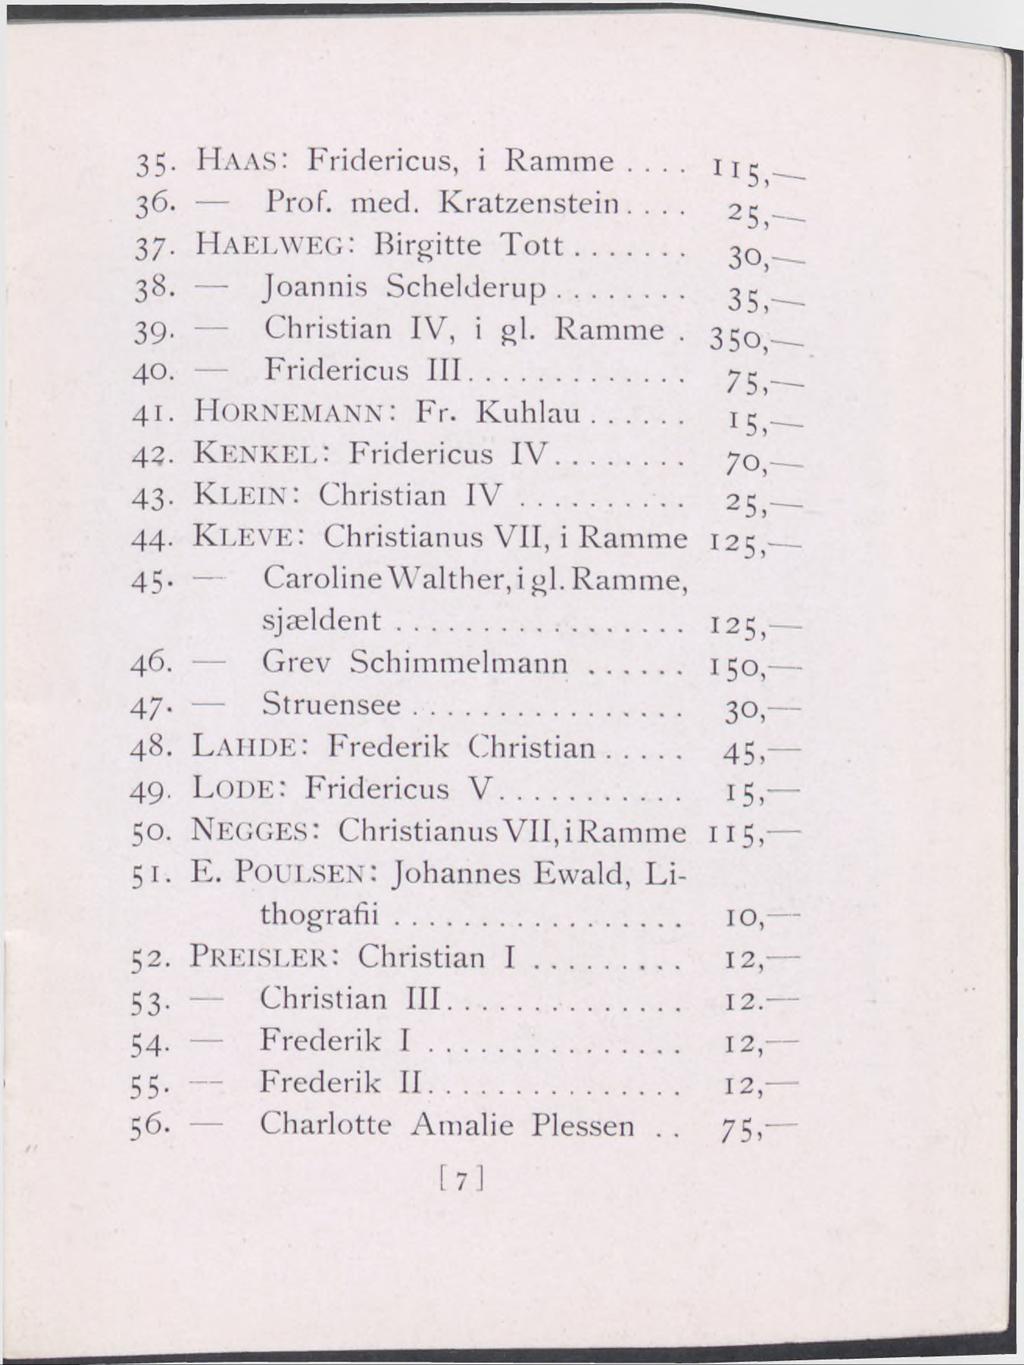 35- Ha a s: Fridericus, i Ramme... 36. Prof. med. Kratzenstein.... 25 37. Ha e l w e g : Birgitte T o tt... 3o 38. Joannis Schelderup... 39. Christian IV, i gi. Ramme. 350 40. Fridericus III... 41.